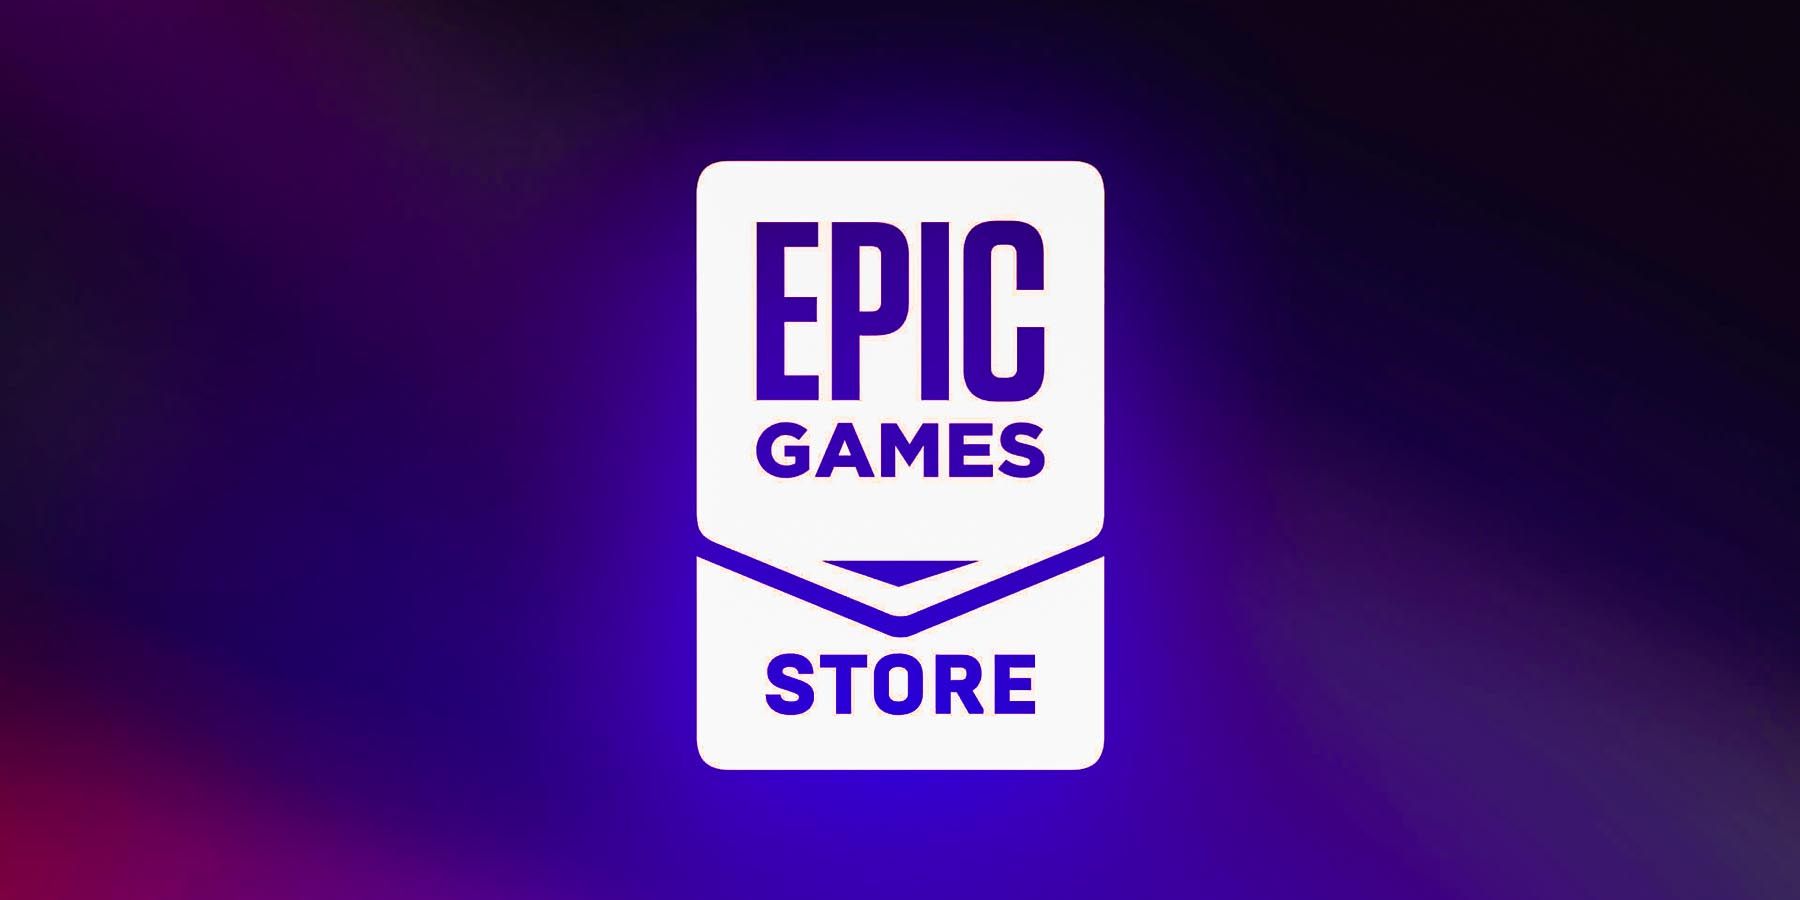 Epic Gamesは6月23日に2つの無料ゲームを保存します。